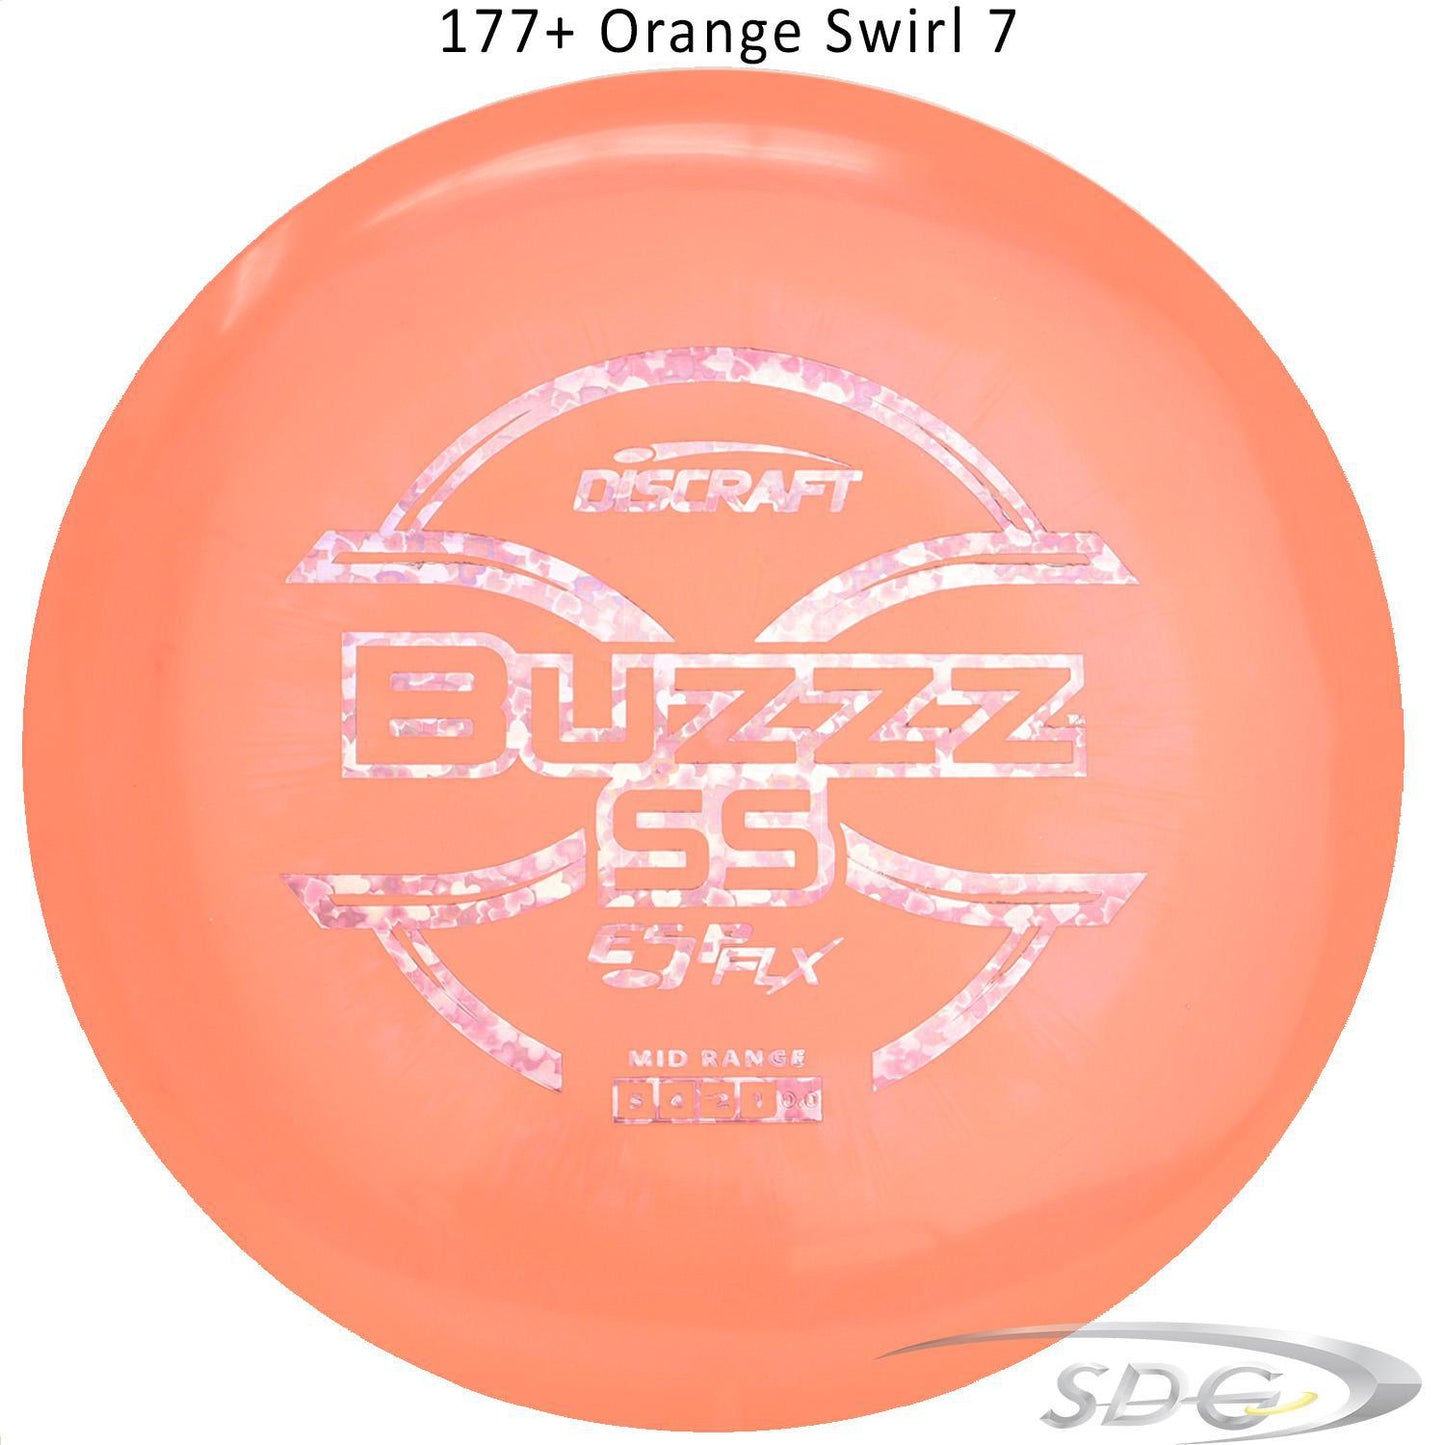 discraft-esp-flx-buzzz-ss-disc-golf-mid-range 177+ Orange Swirl 7 